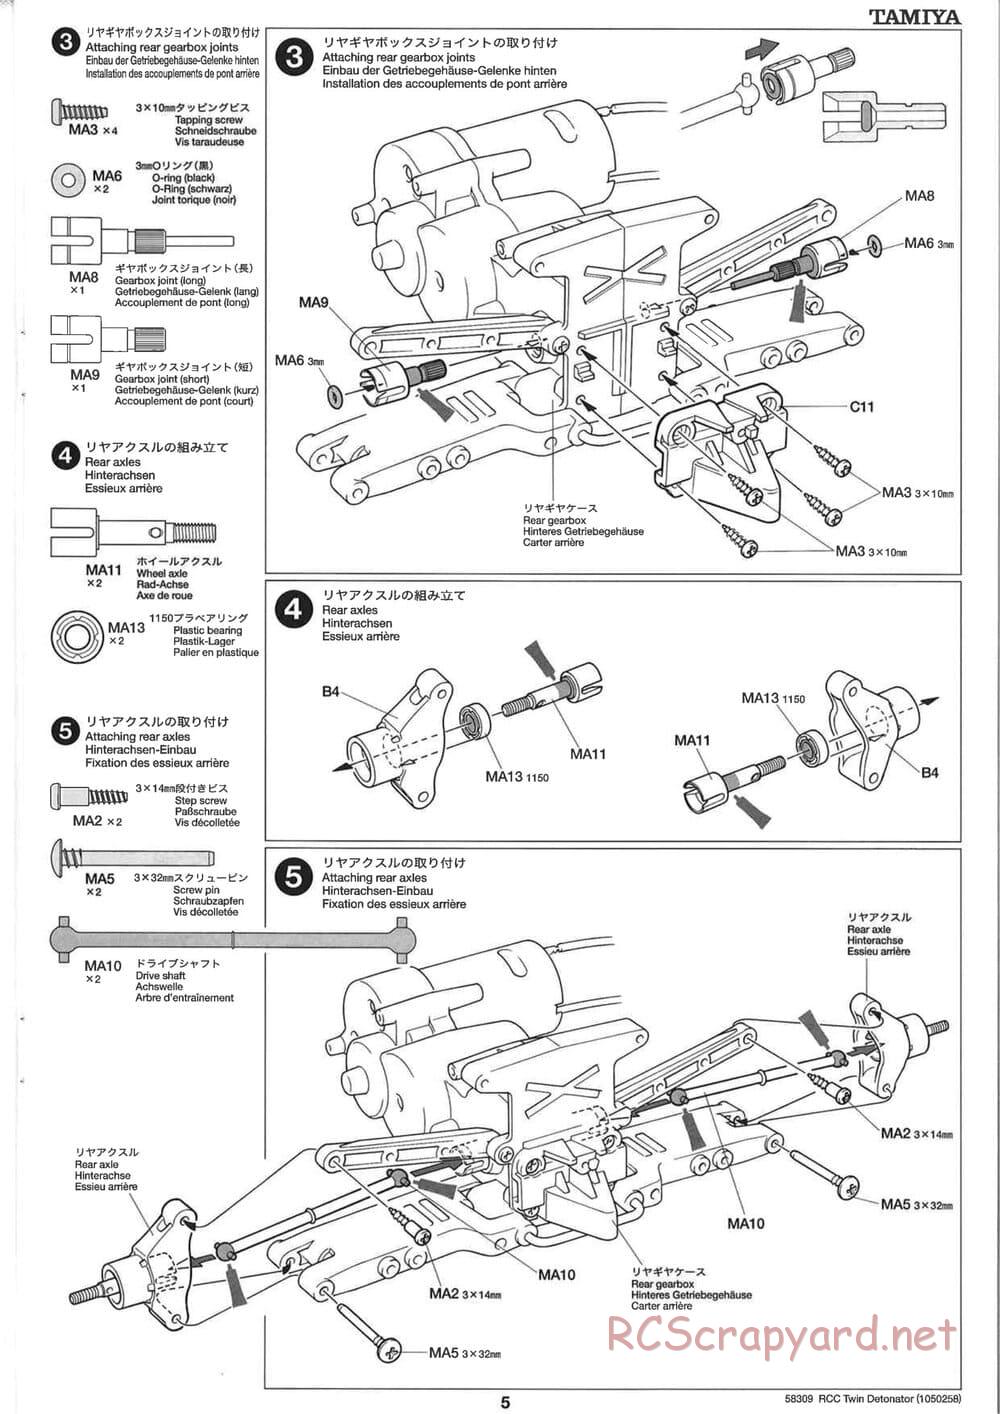 Tamiya - Twin Detonator - WR-01 Chassis - Manual - Page 5